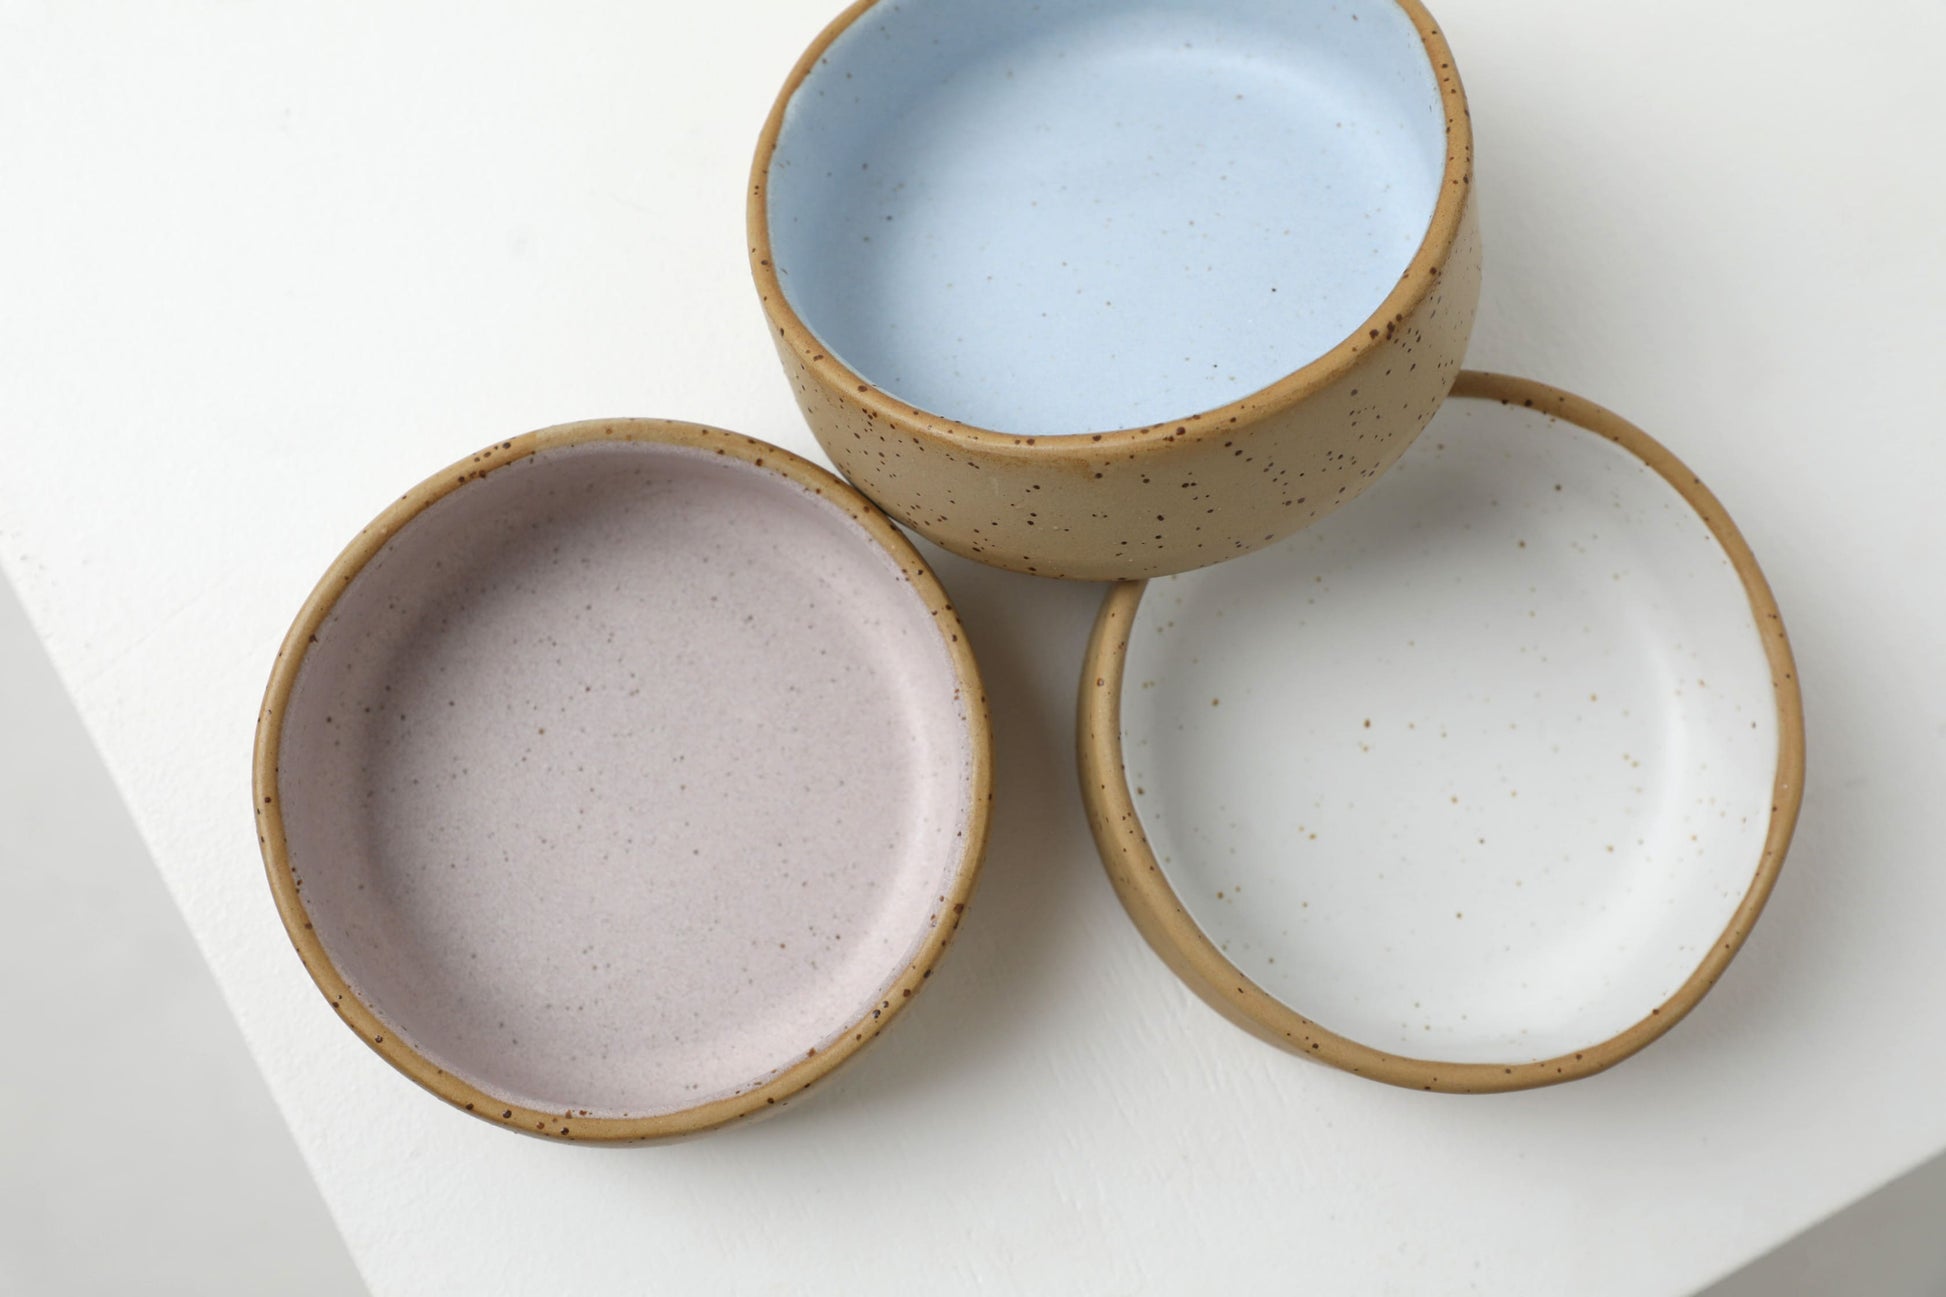 Raw+Sky blue HANDMADE CERAMIC dog bowls - European handmade dog accessories by My Wild Other